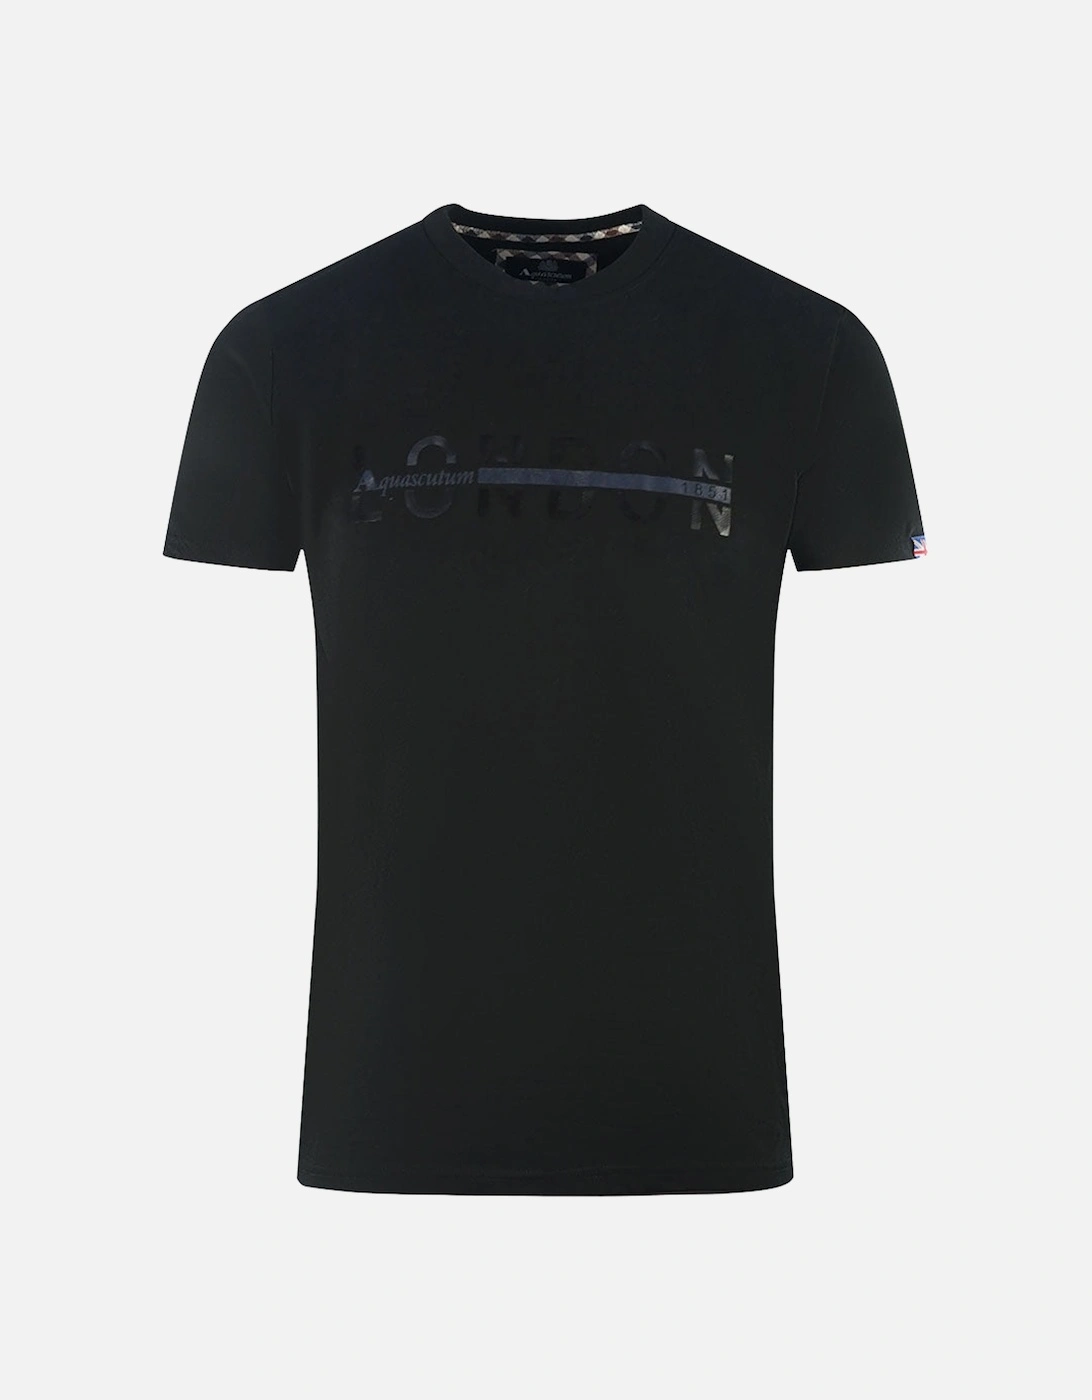 London 1851 Split Logo Black T-Shirt, 4 of 3